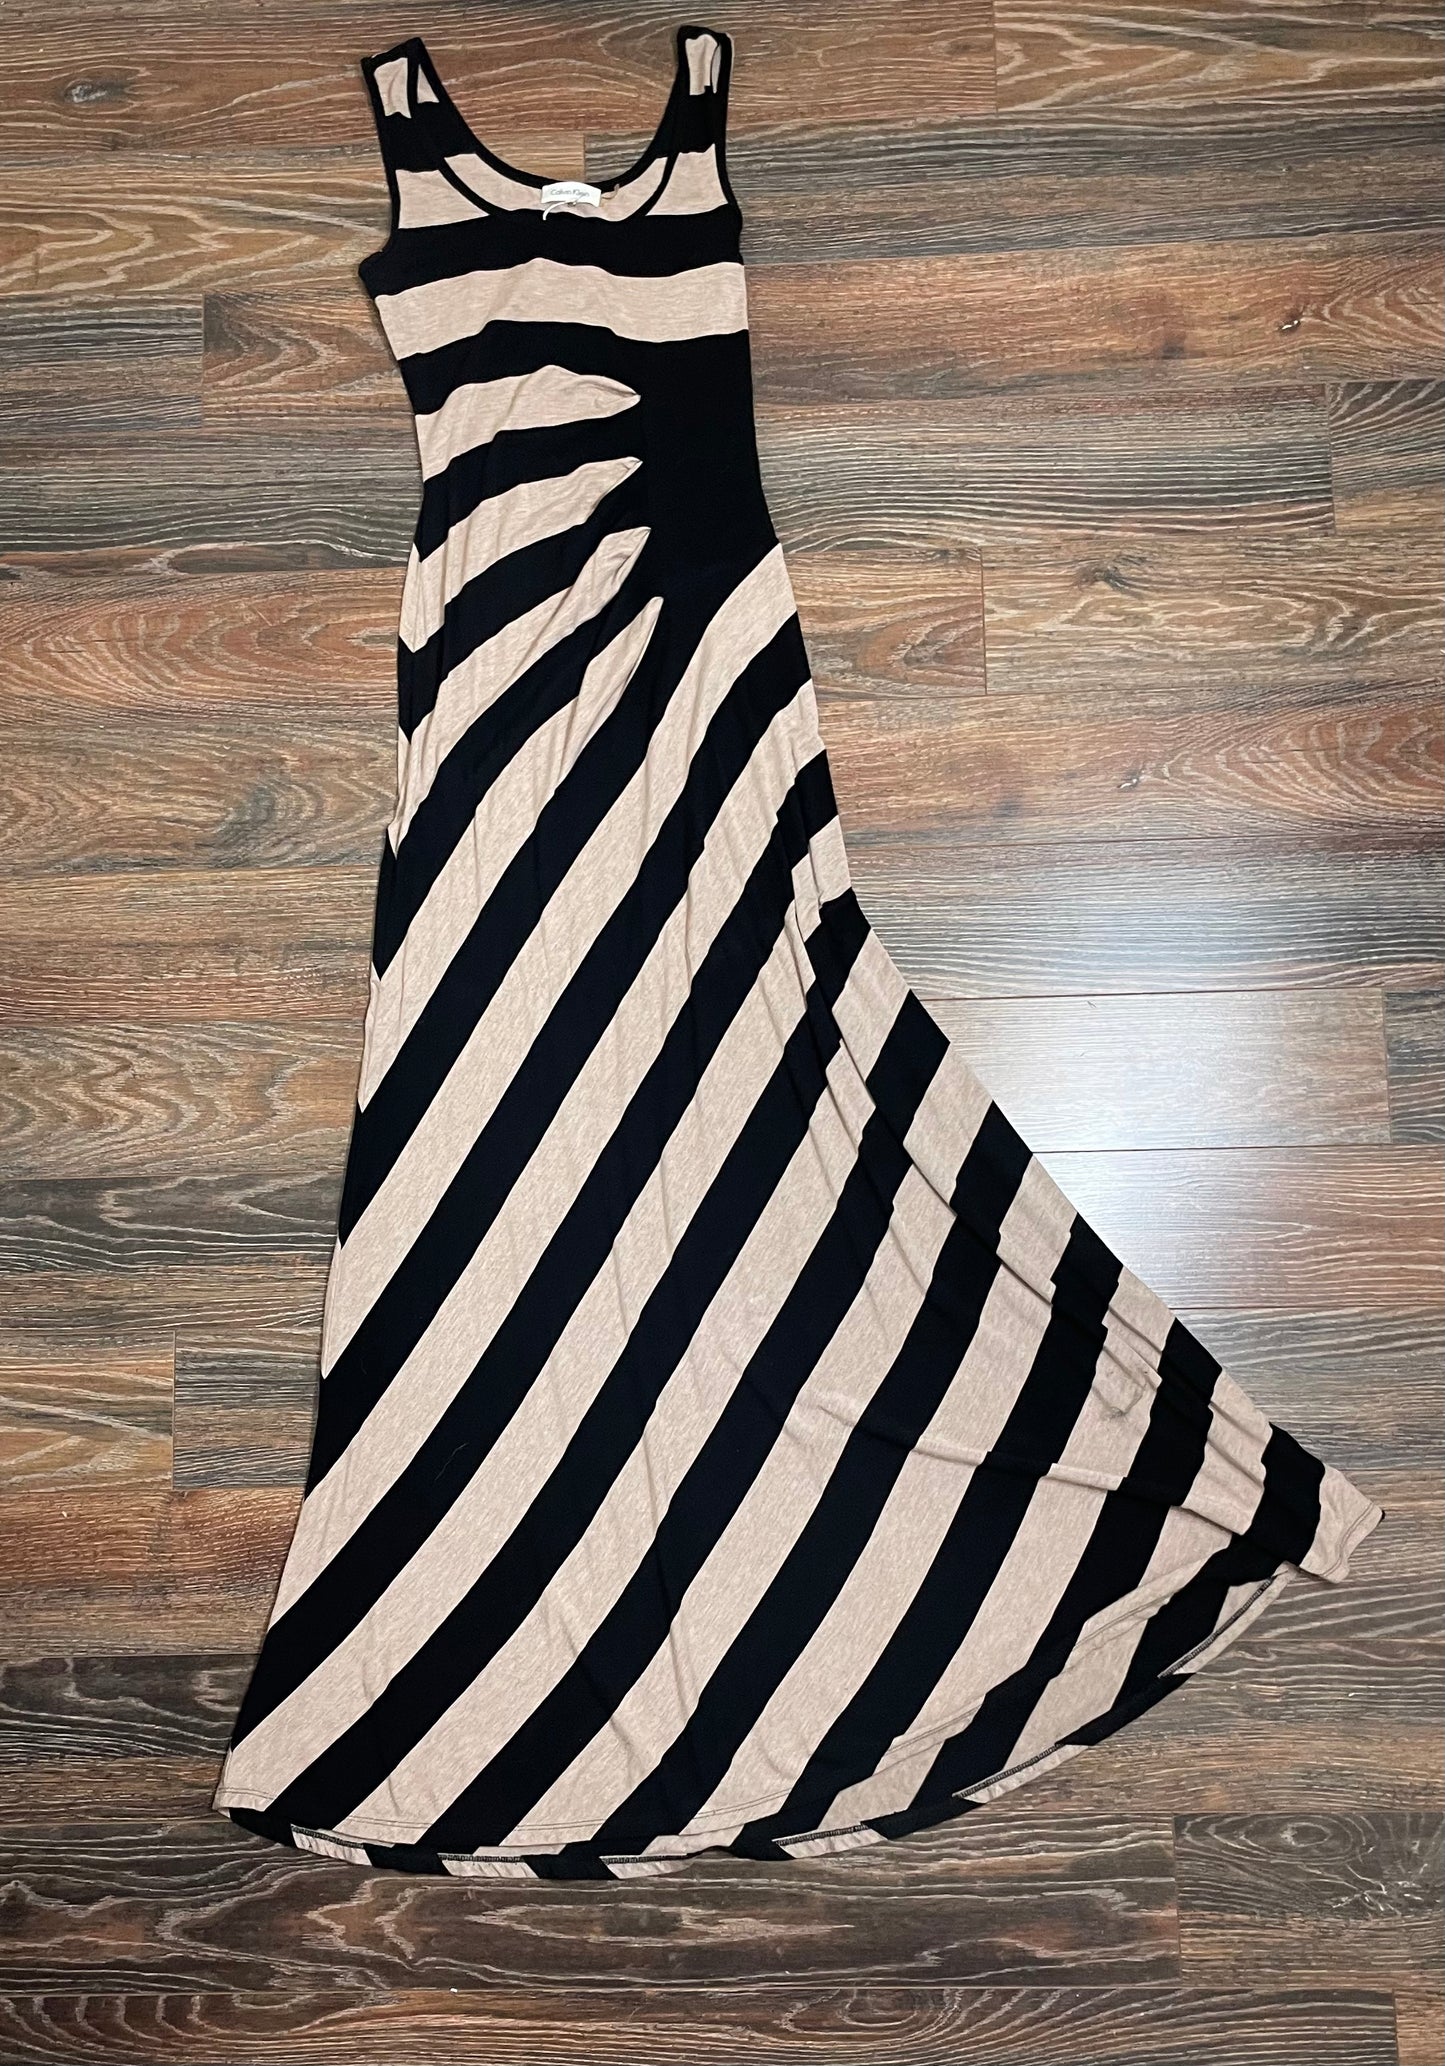 Calvin Klein Striped Maxi Dress